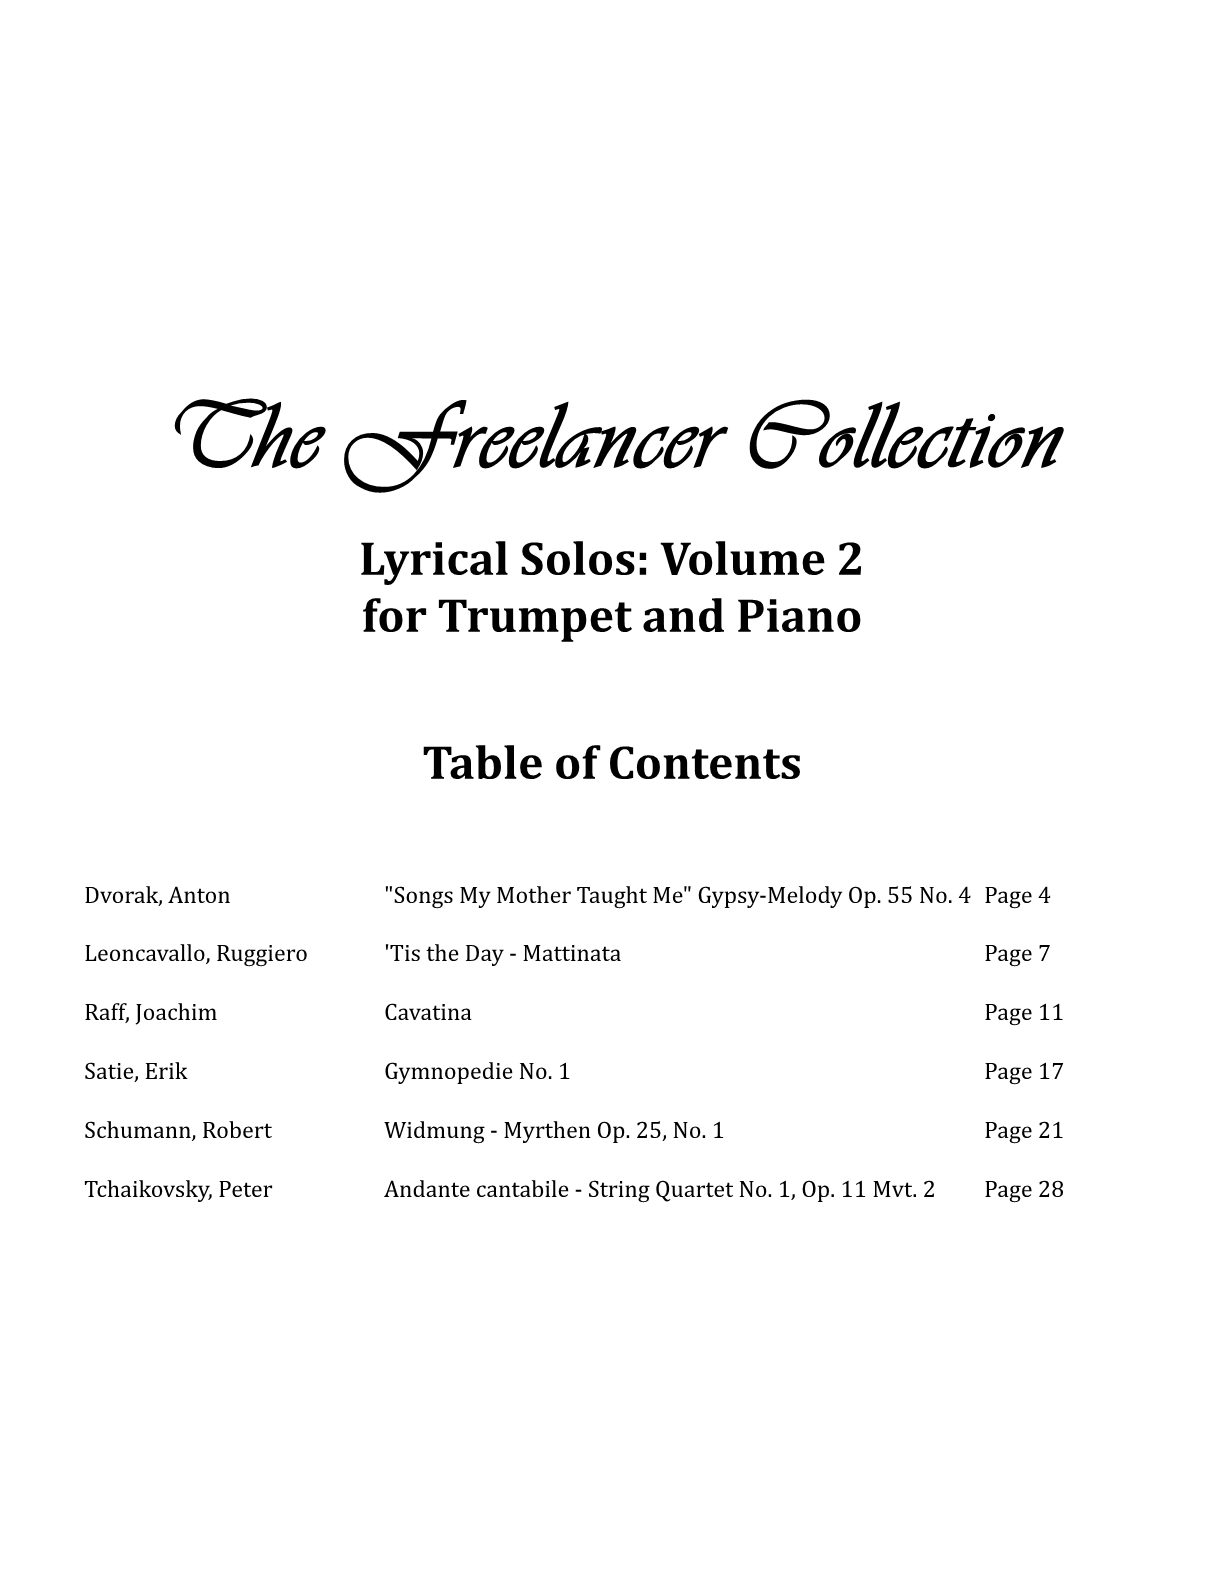 Hepler - Freelancer Collection Lyrical Solos Vol 2 (Trp & Piano)